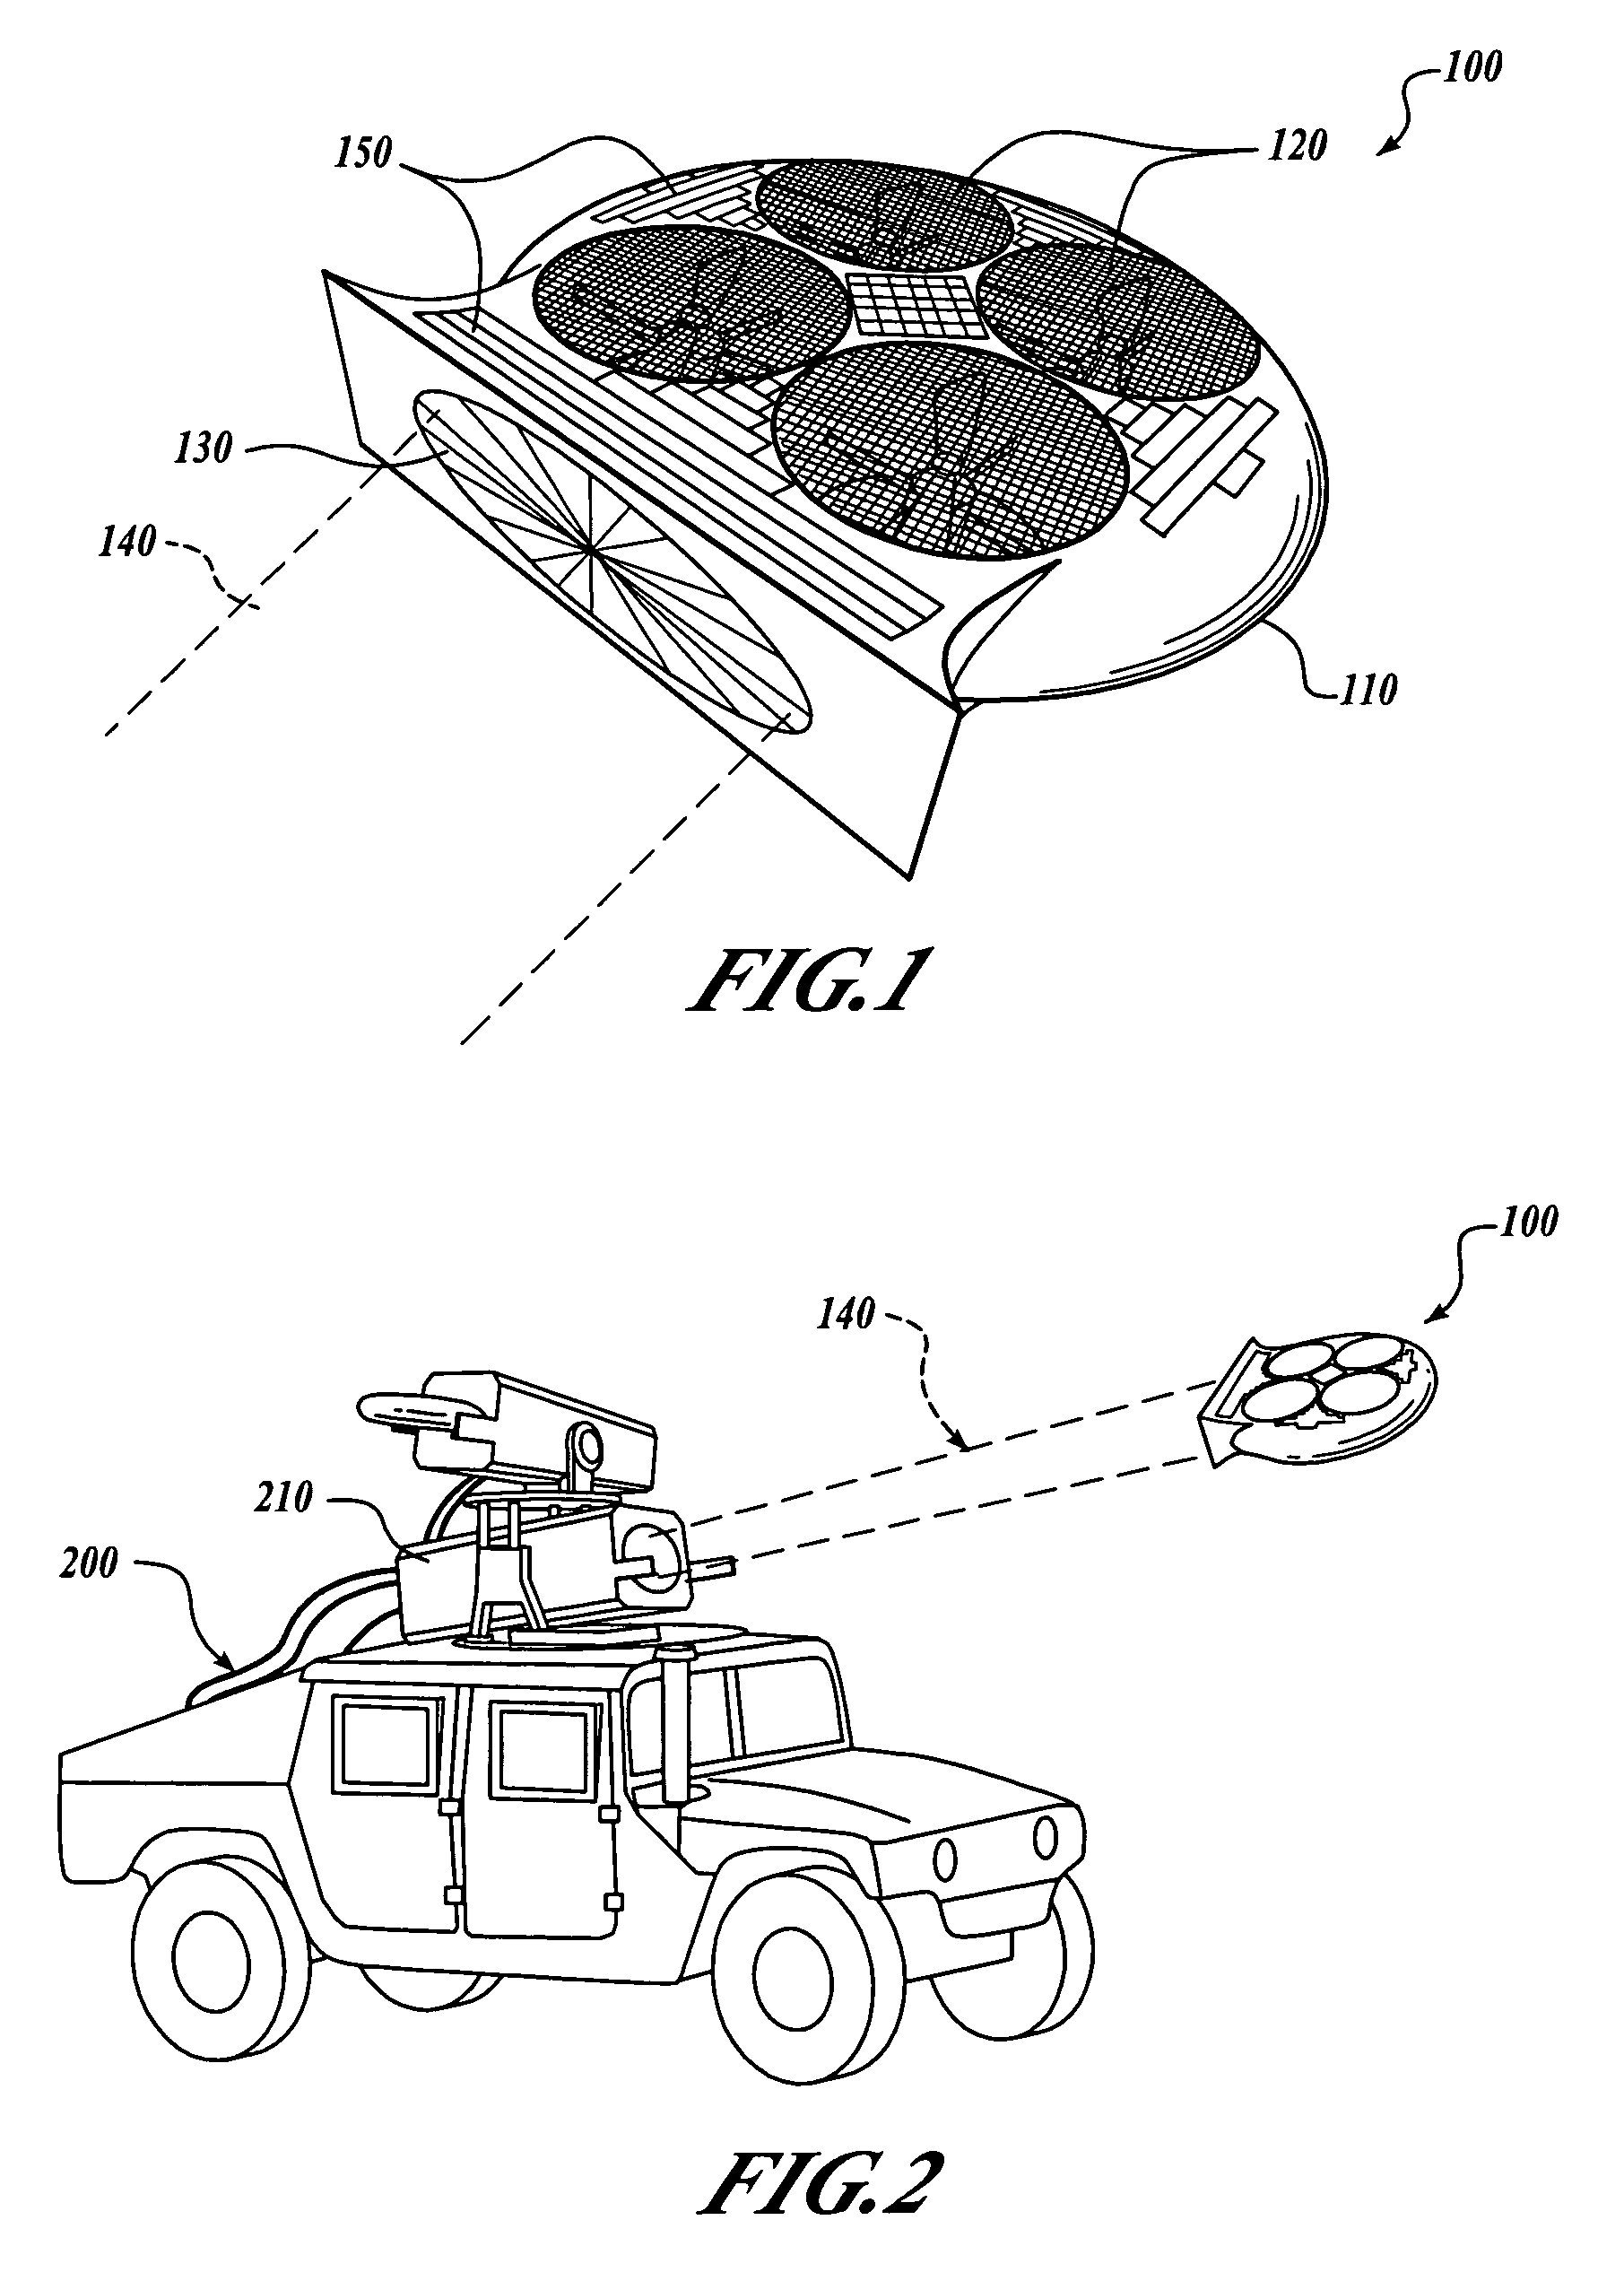 Laser-tethered vehicle